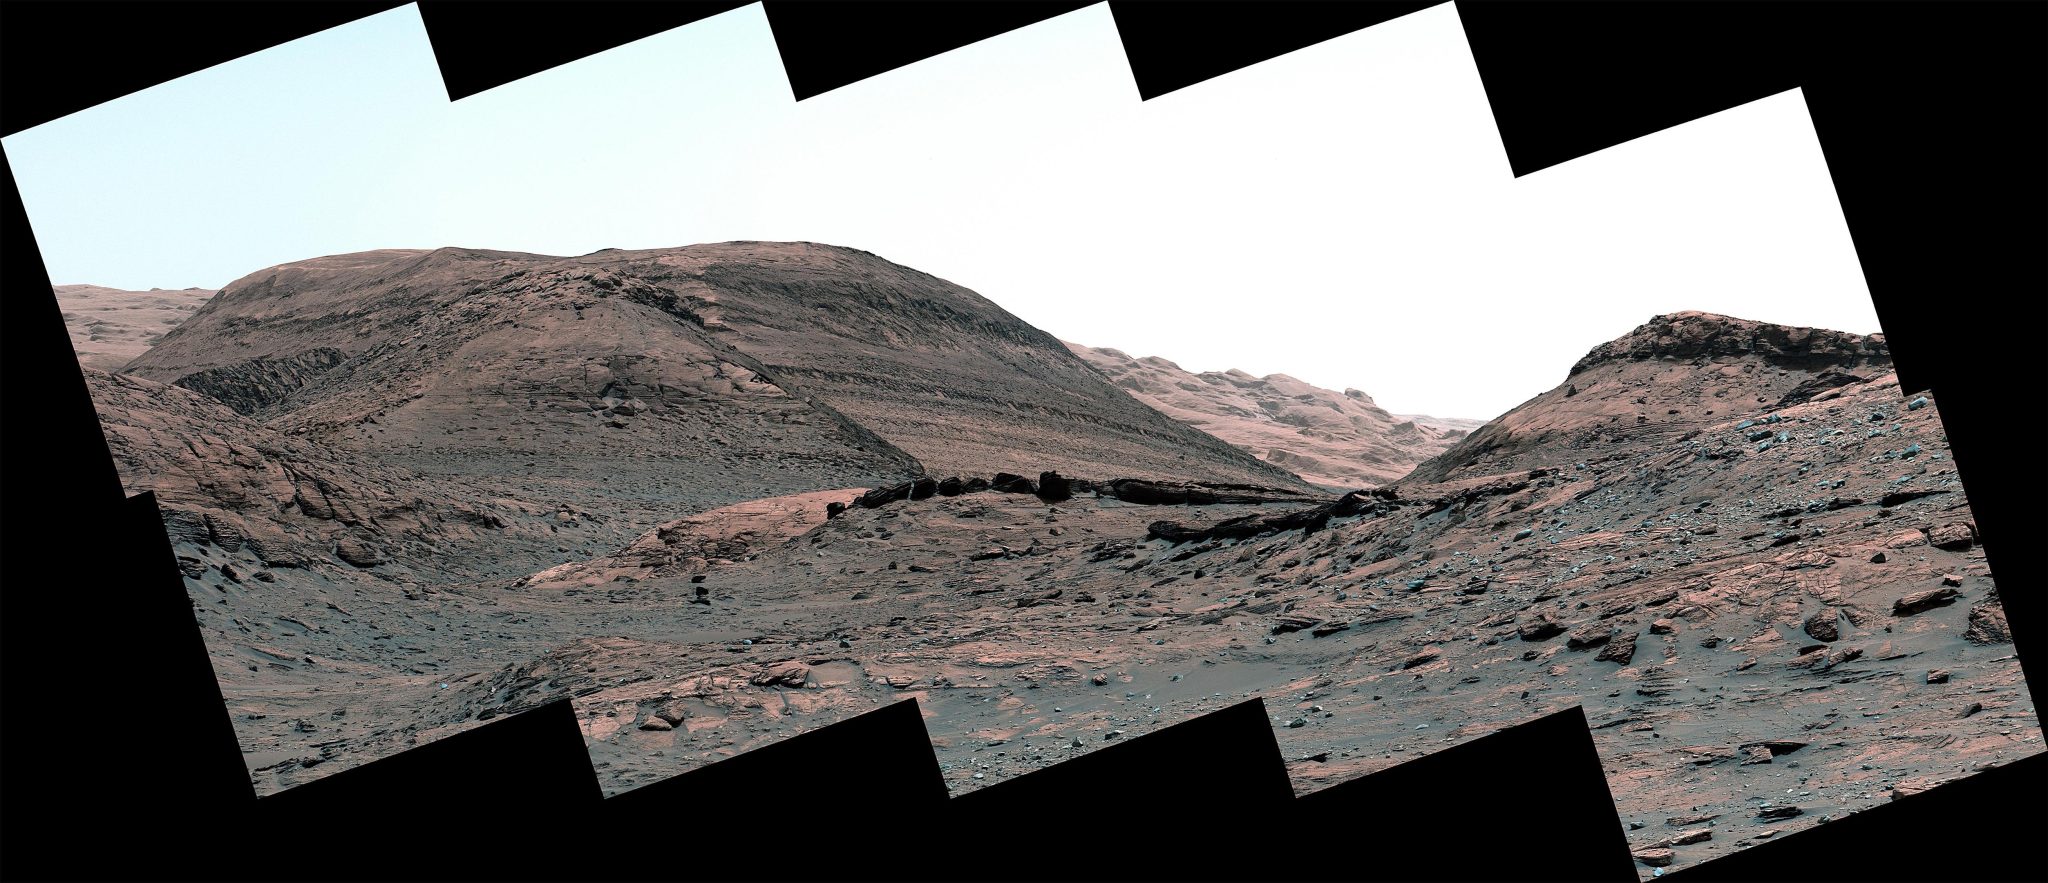 Curiosity Mars Rover Sulphate Bearing Region